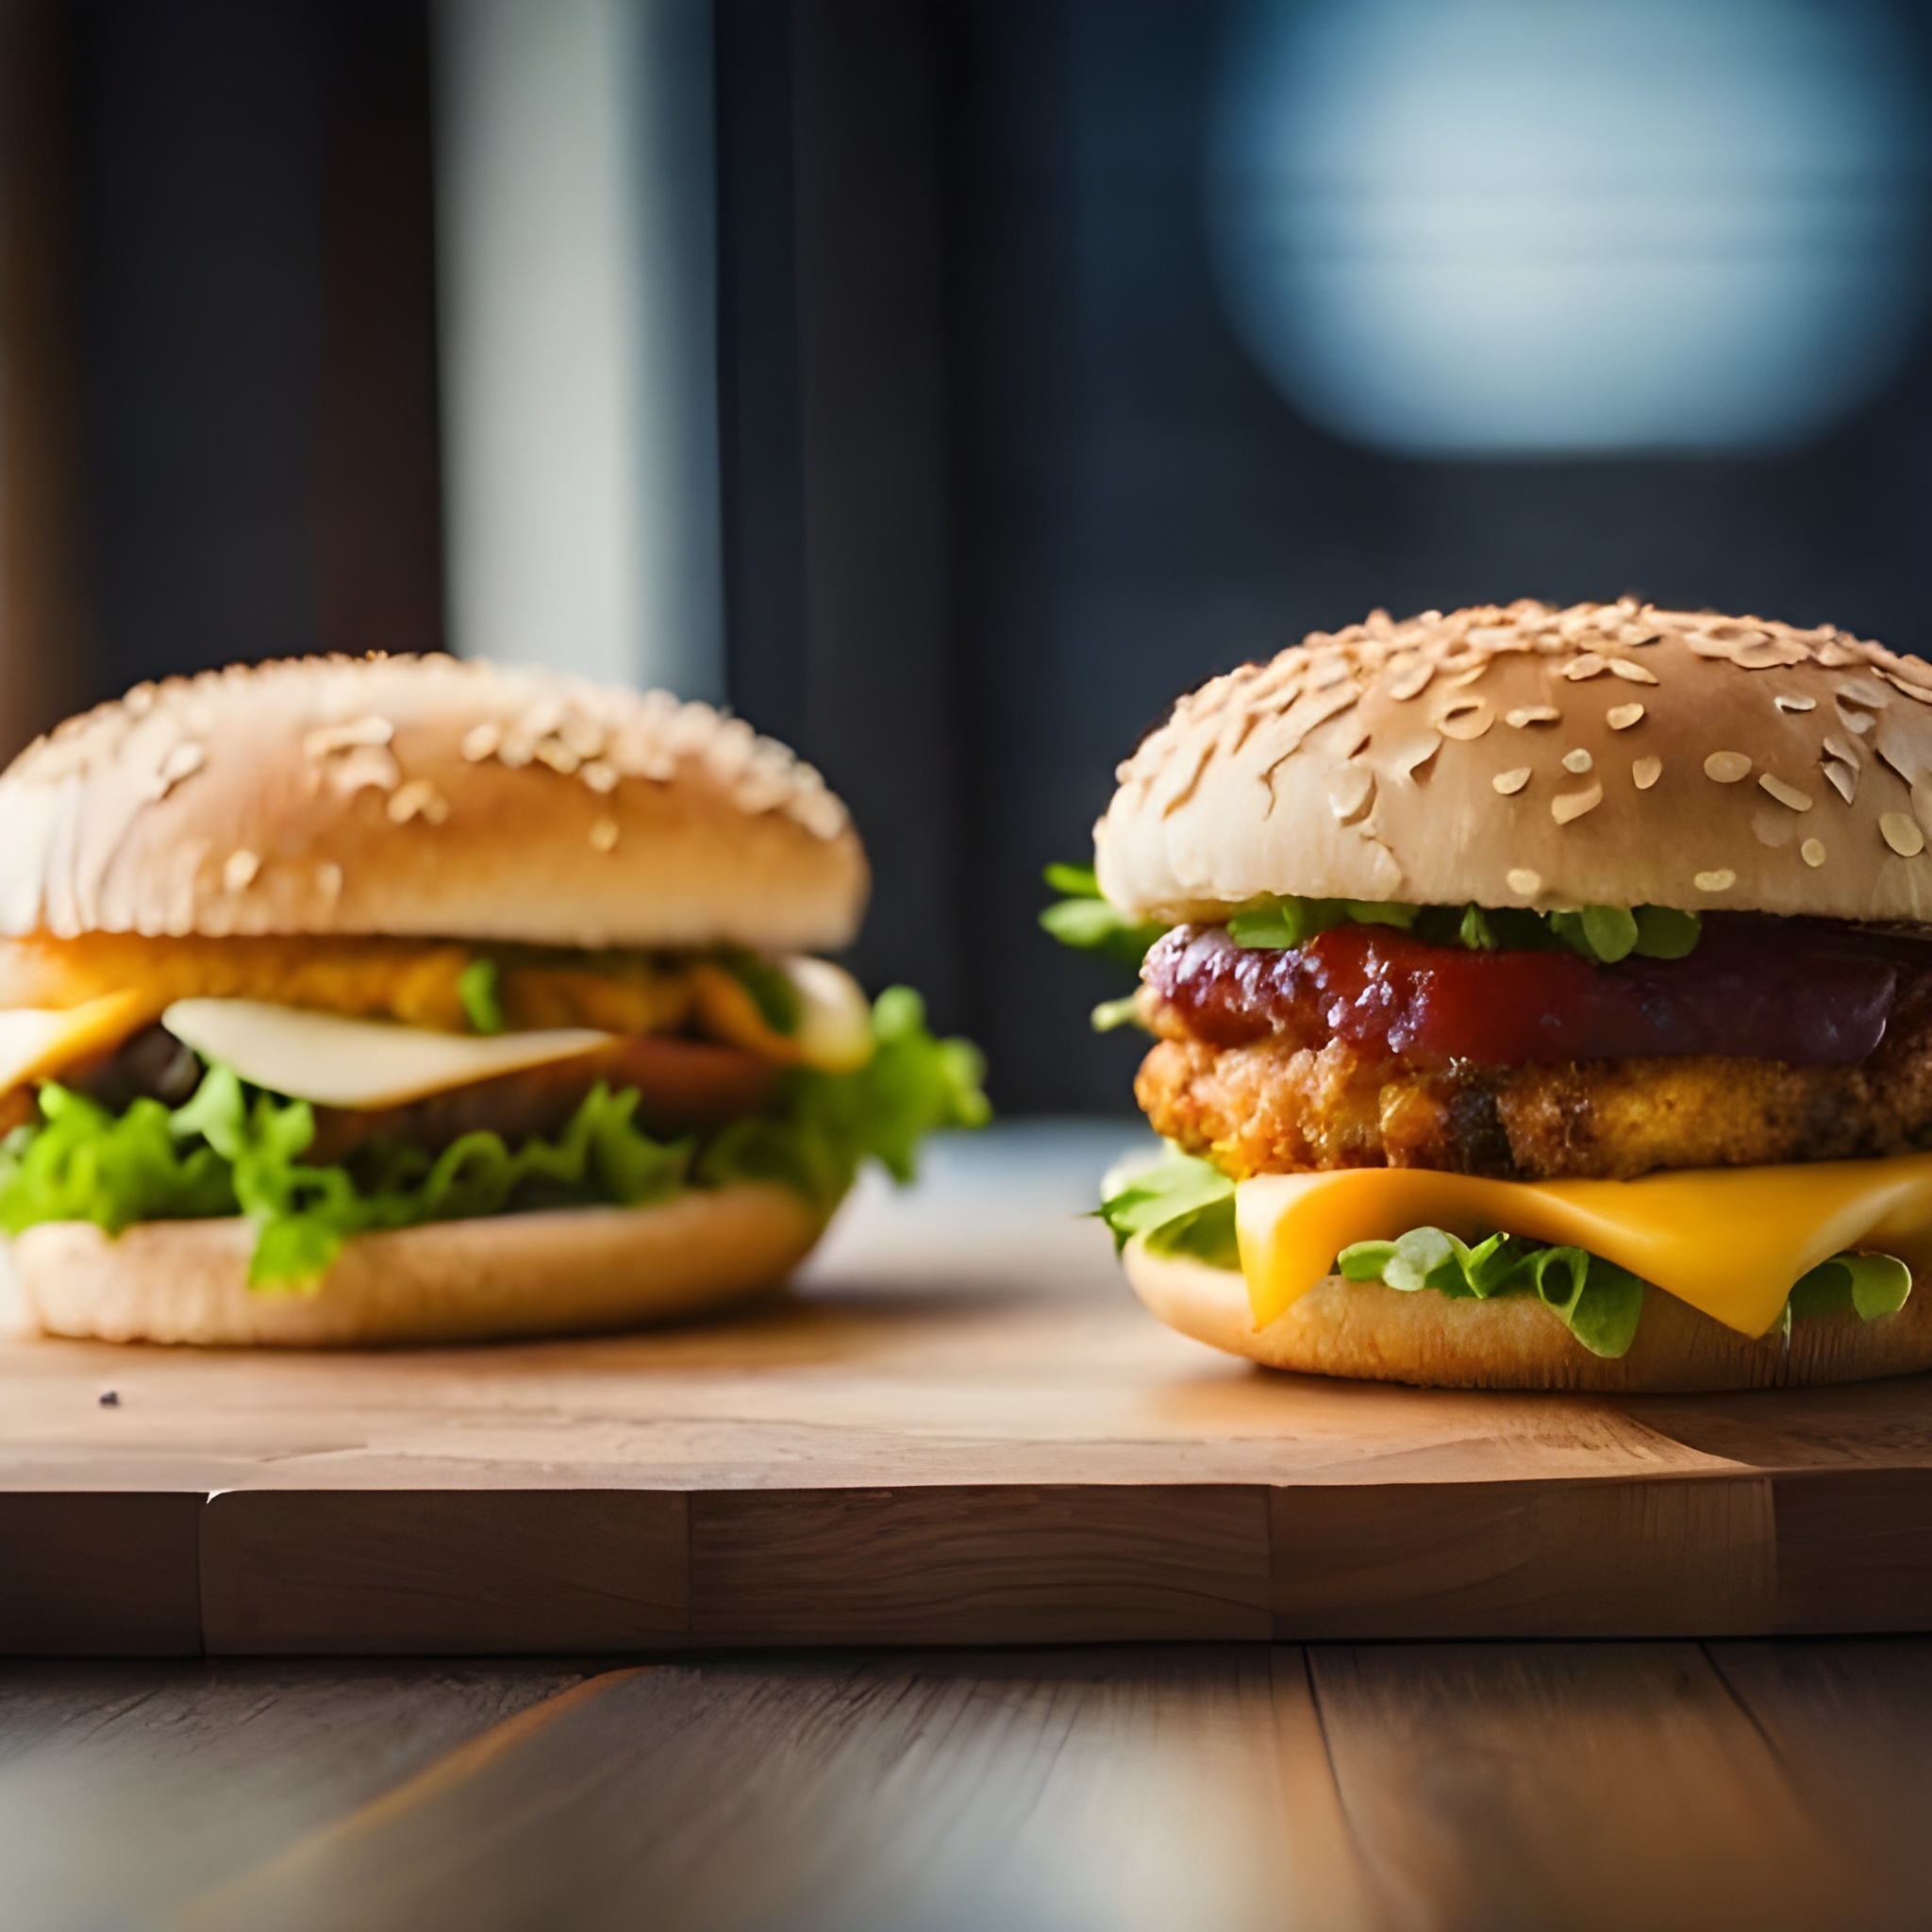 Burger King Menu Vegan Burger Plant-Based Burger Vegan Fries Vegan Nuggets